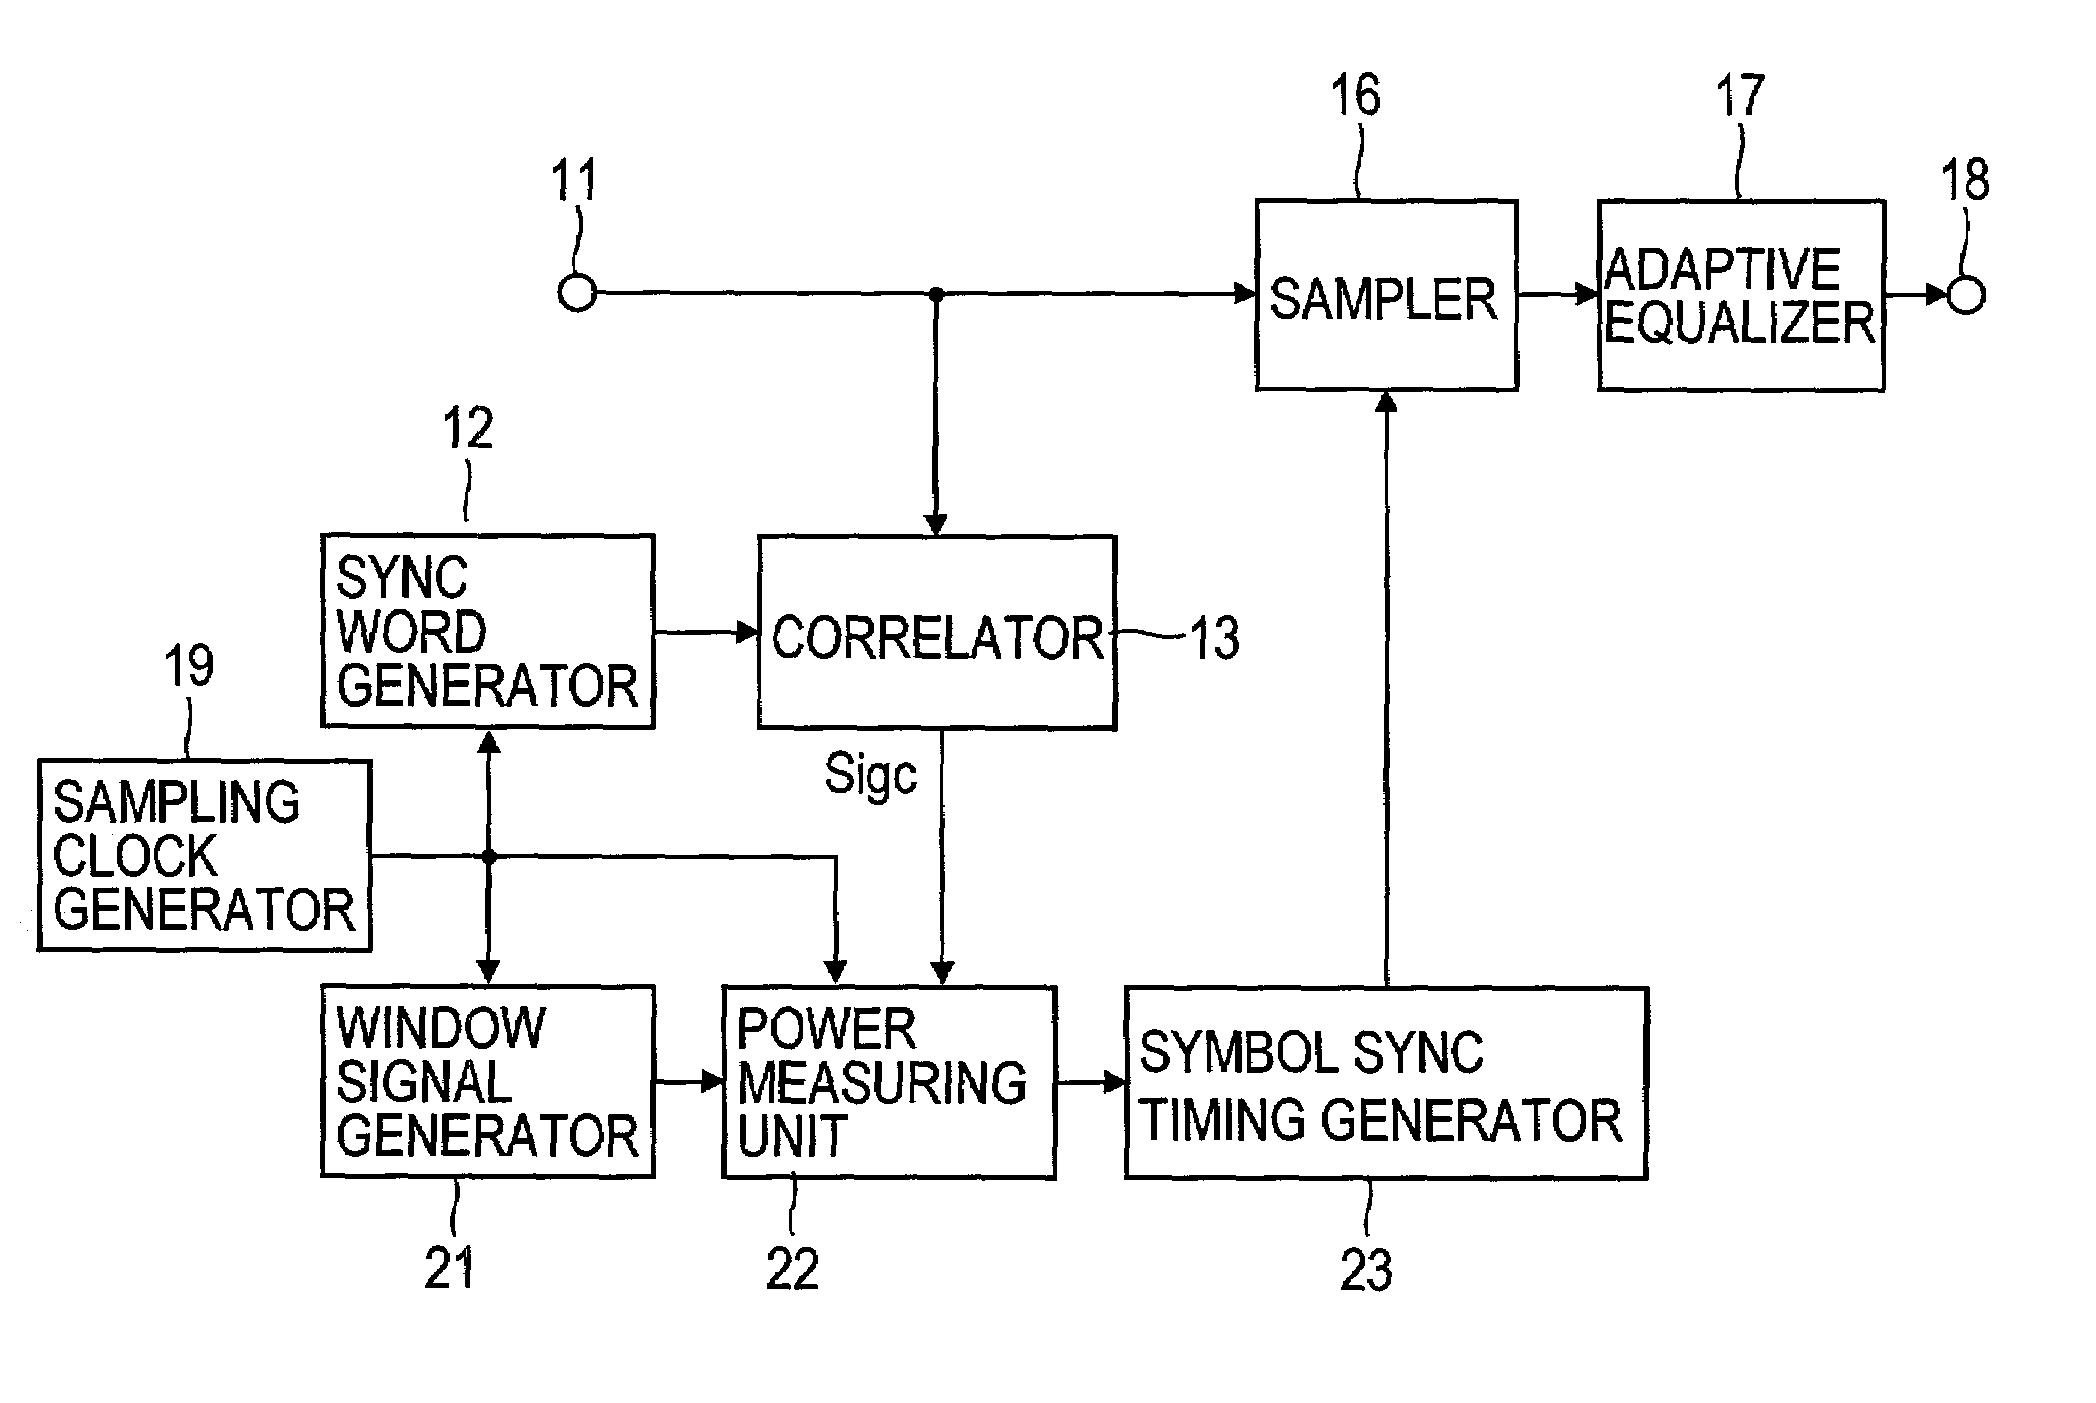 Adaptive equalization apparatus and method